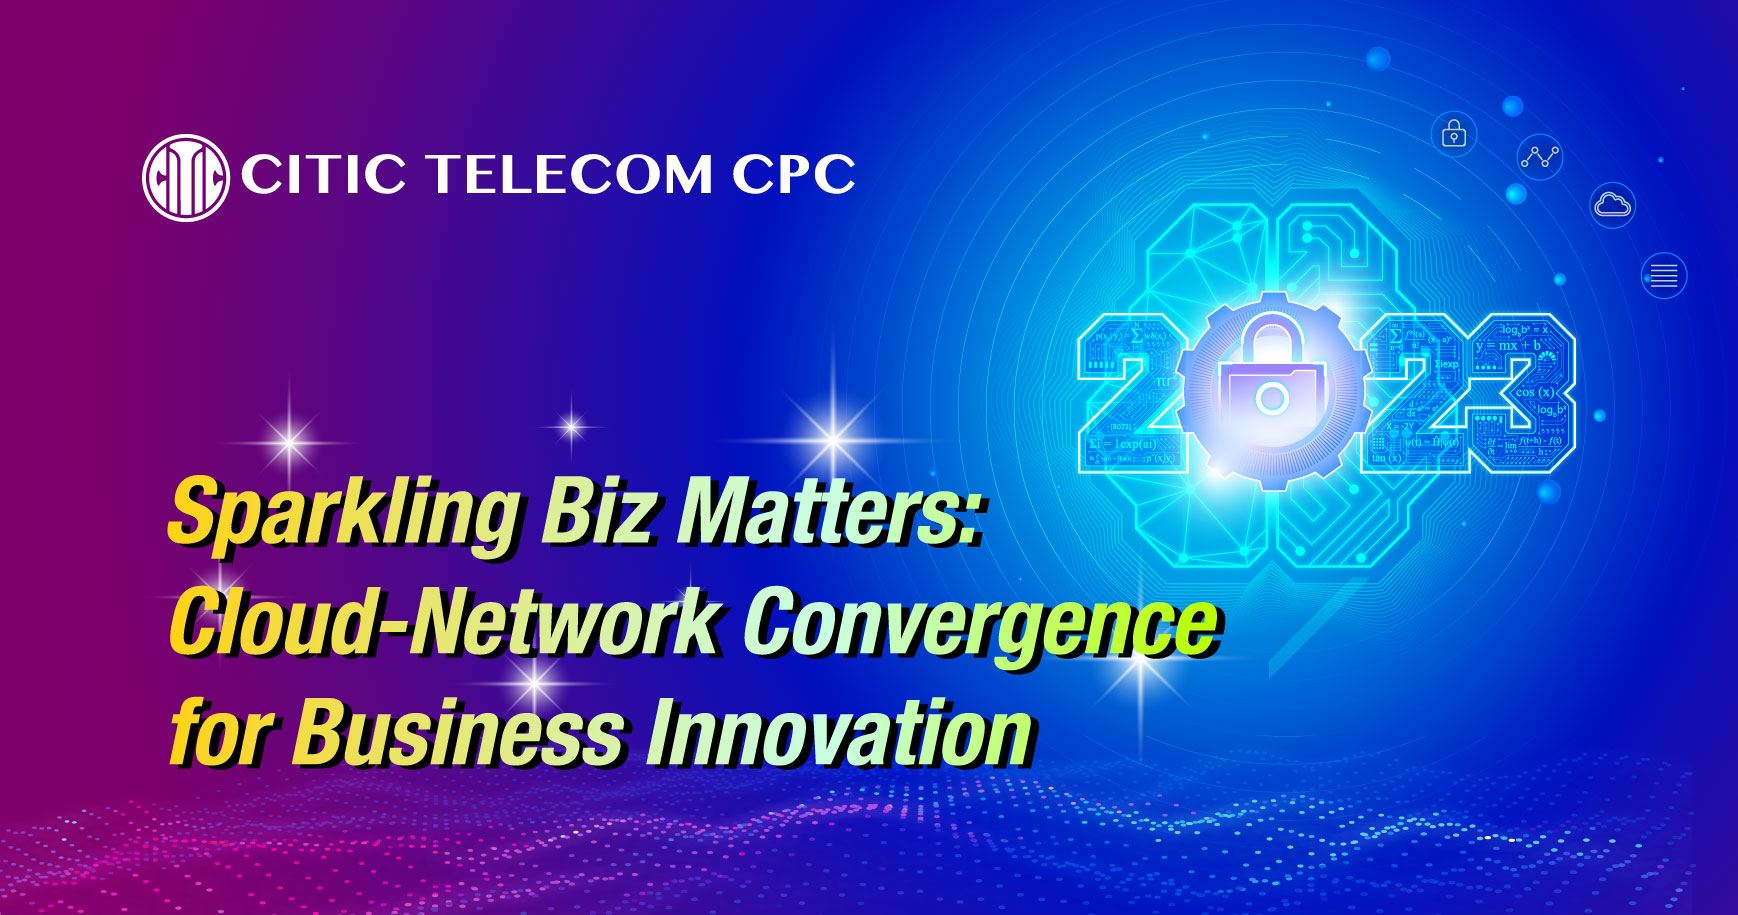 Sparkling Biz Matters: Cloud-Network Convergence for Business Innovation